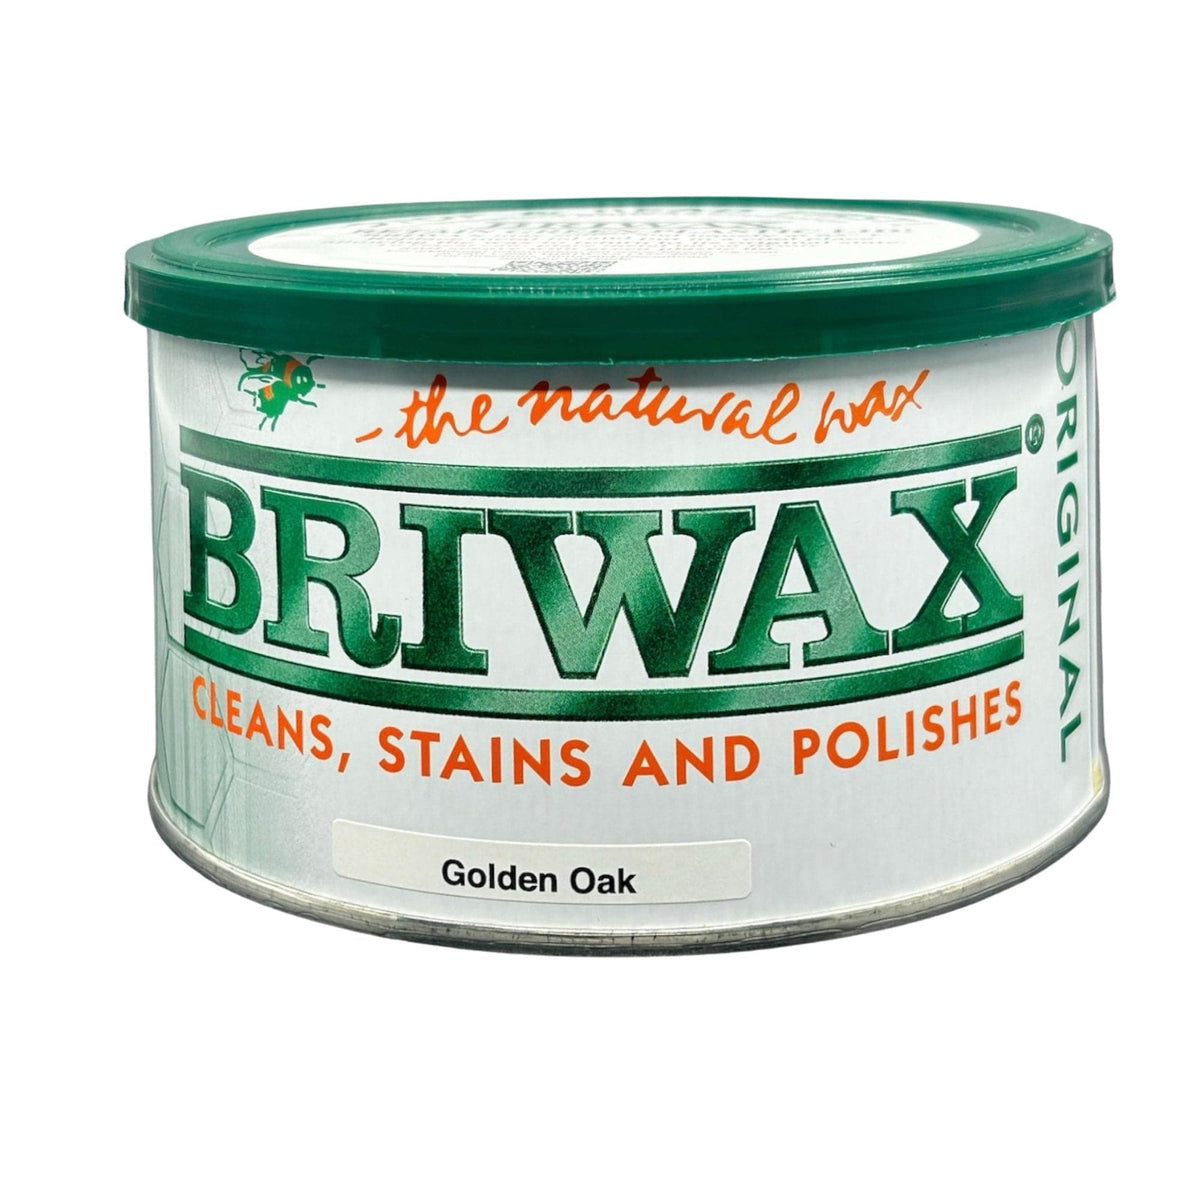 NEW COLOUR - Briwax Original Slate Grey